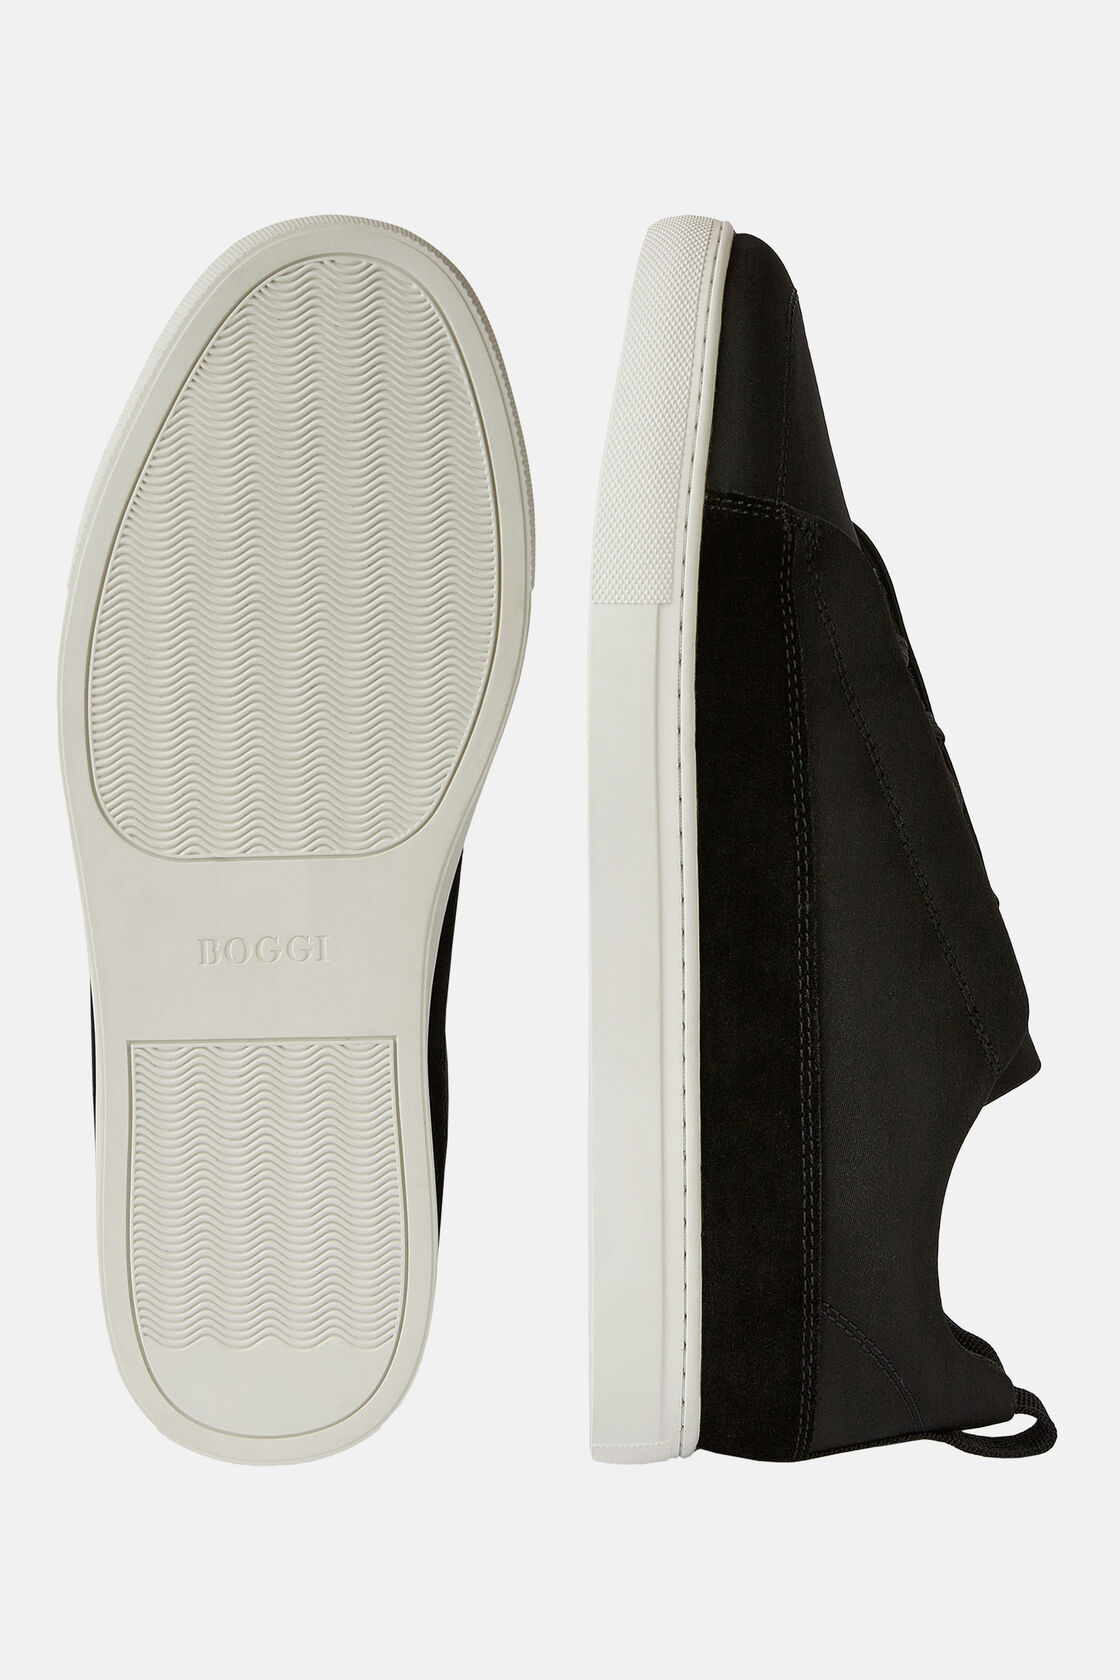 Aθλητικά παπούτσια με κορδόνια από τεχνικό ύφασμα, Black, hi-res